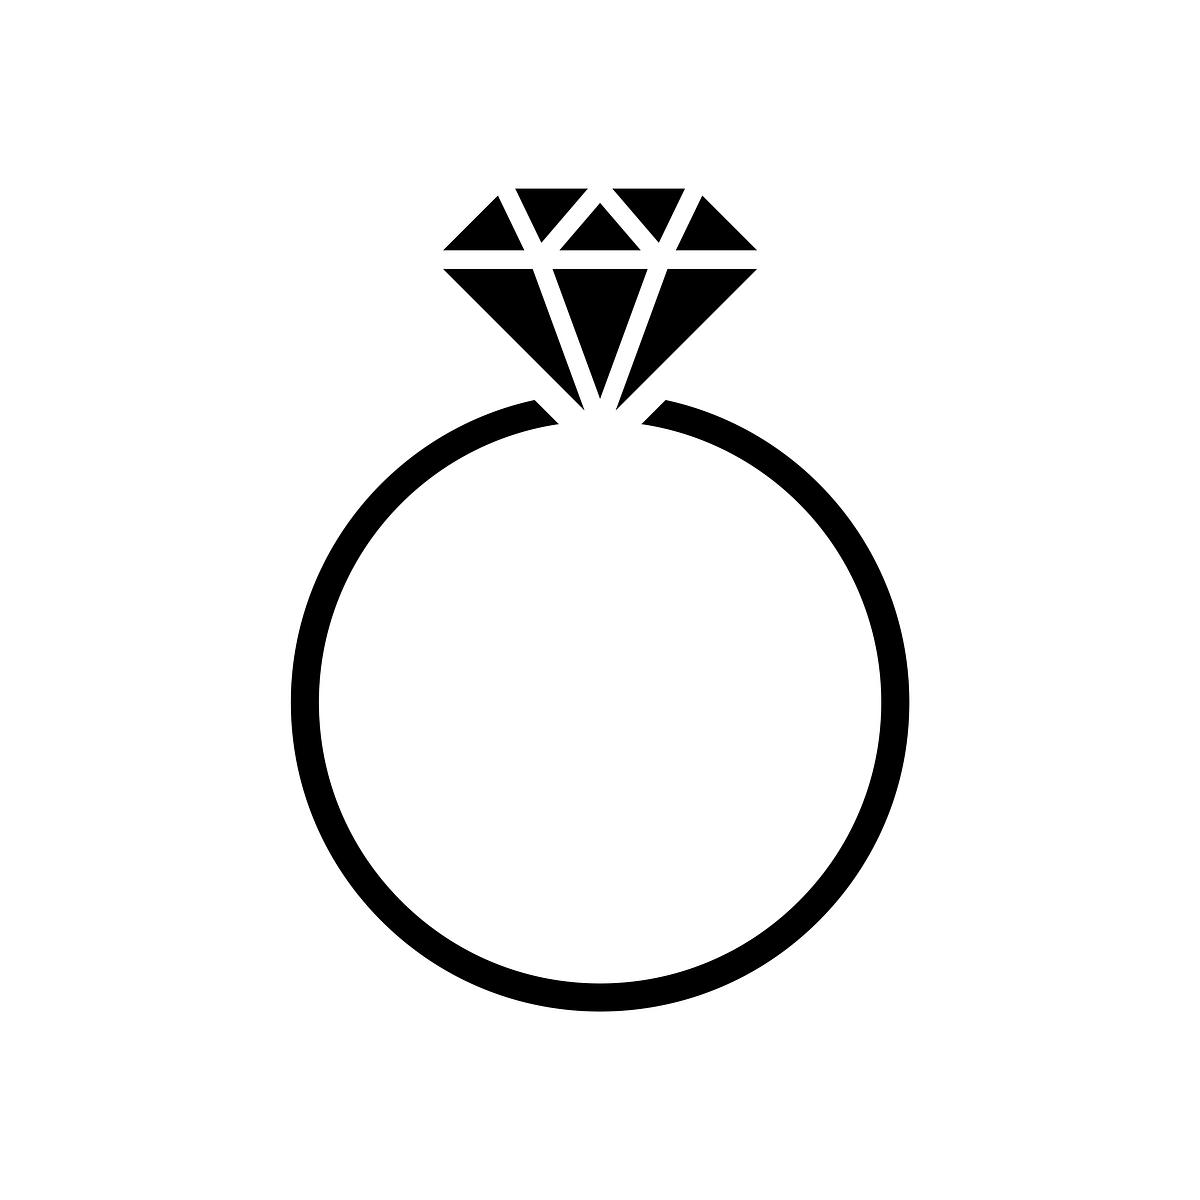 Download Diamond wedding ring graphic illustration | Free stock ...